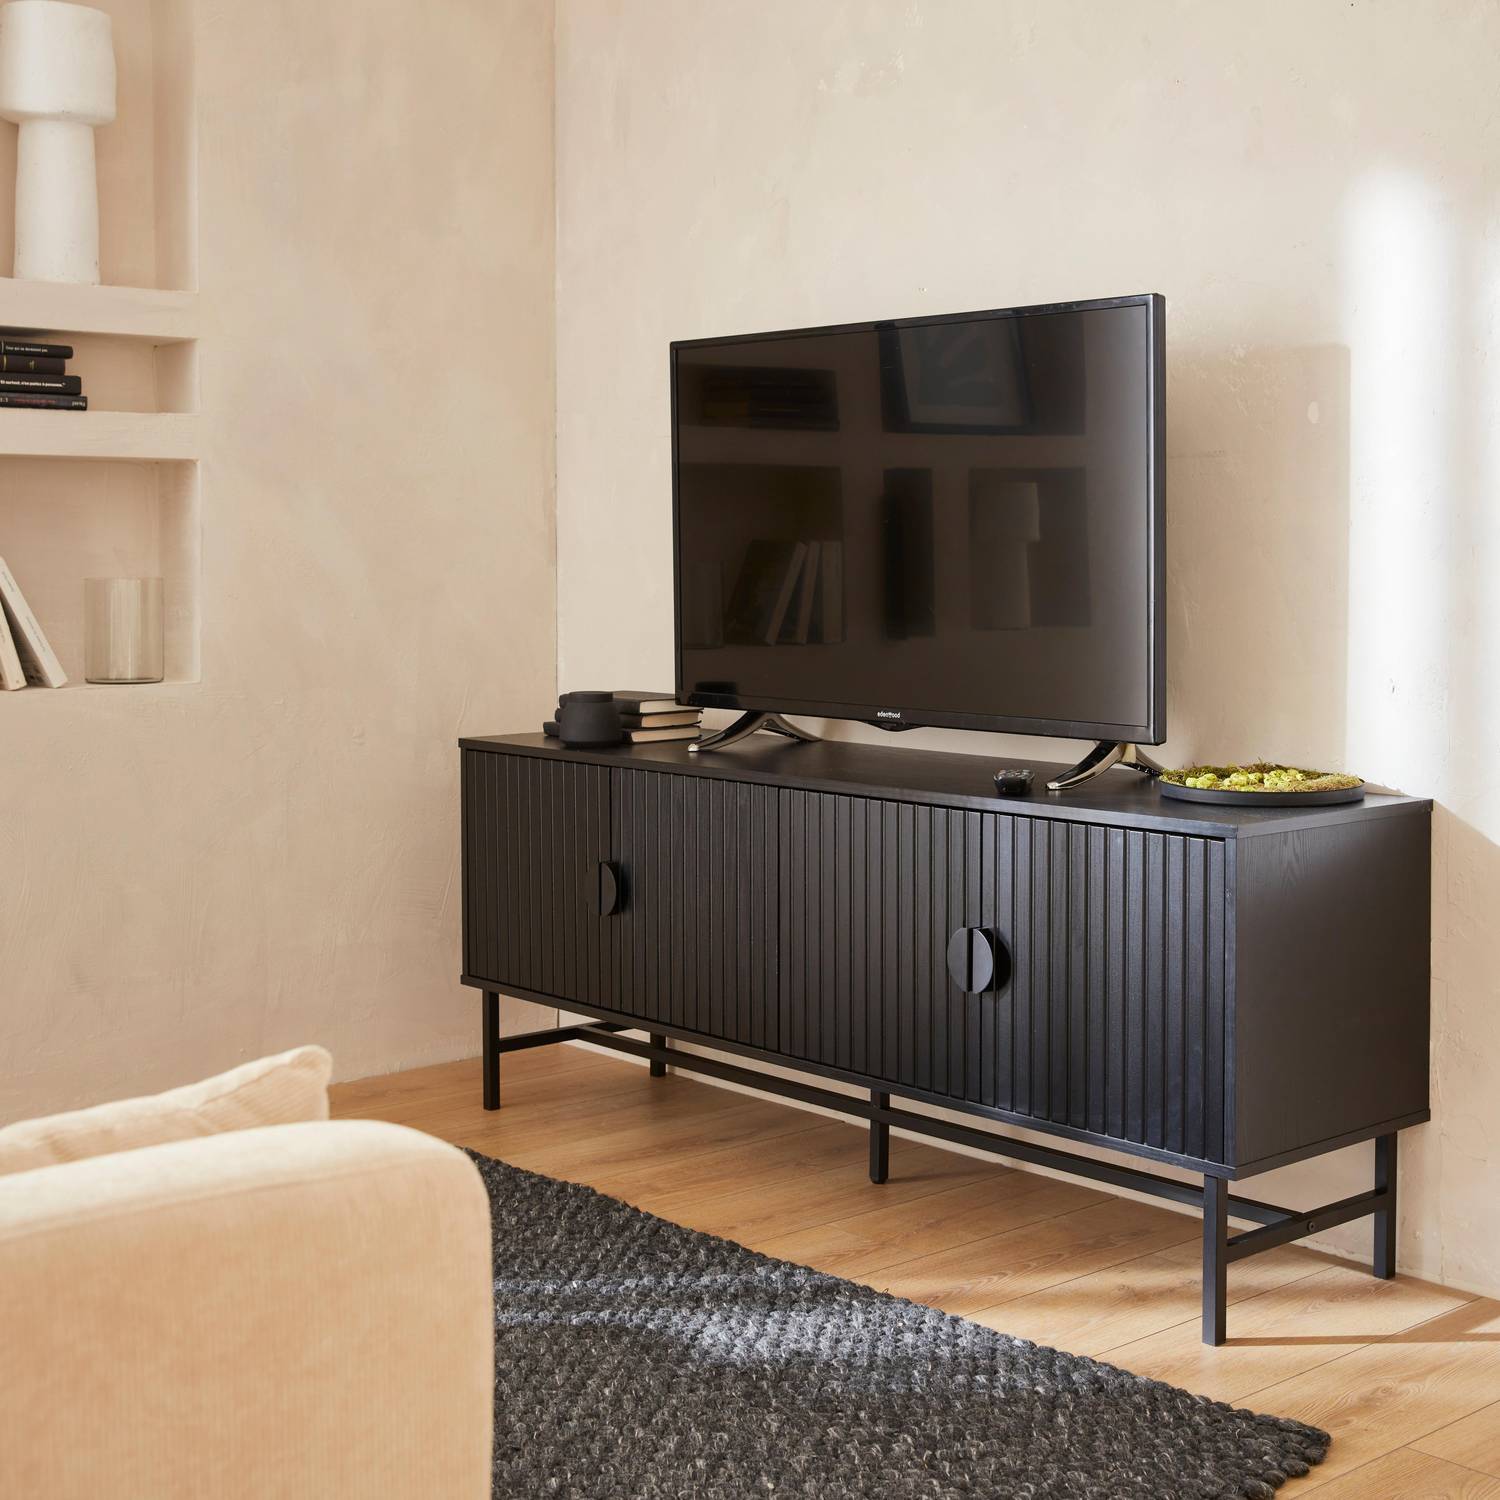 Mueble de TV, Bazalt, cuatro puertas, dos estantes, 157,5 x 39 x 60cm Photo1